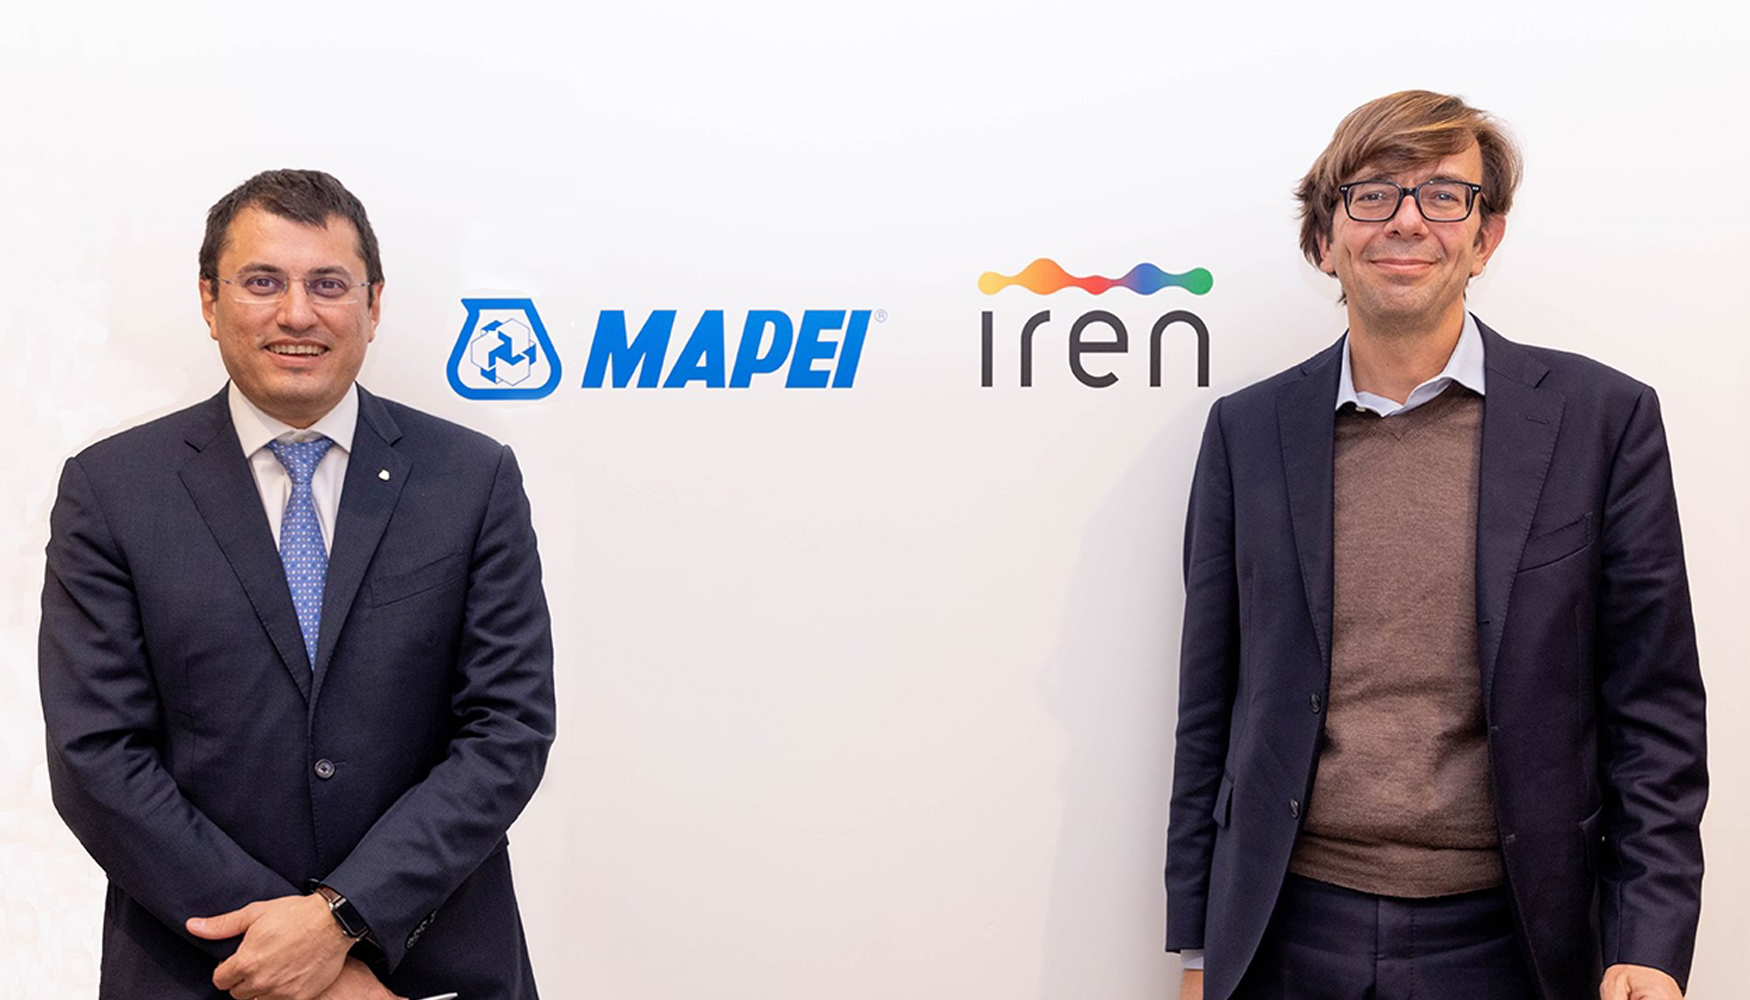 Marco Squinzi, CEO de Mapei, y Massimiliano Bianco, director general de Iren